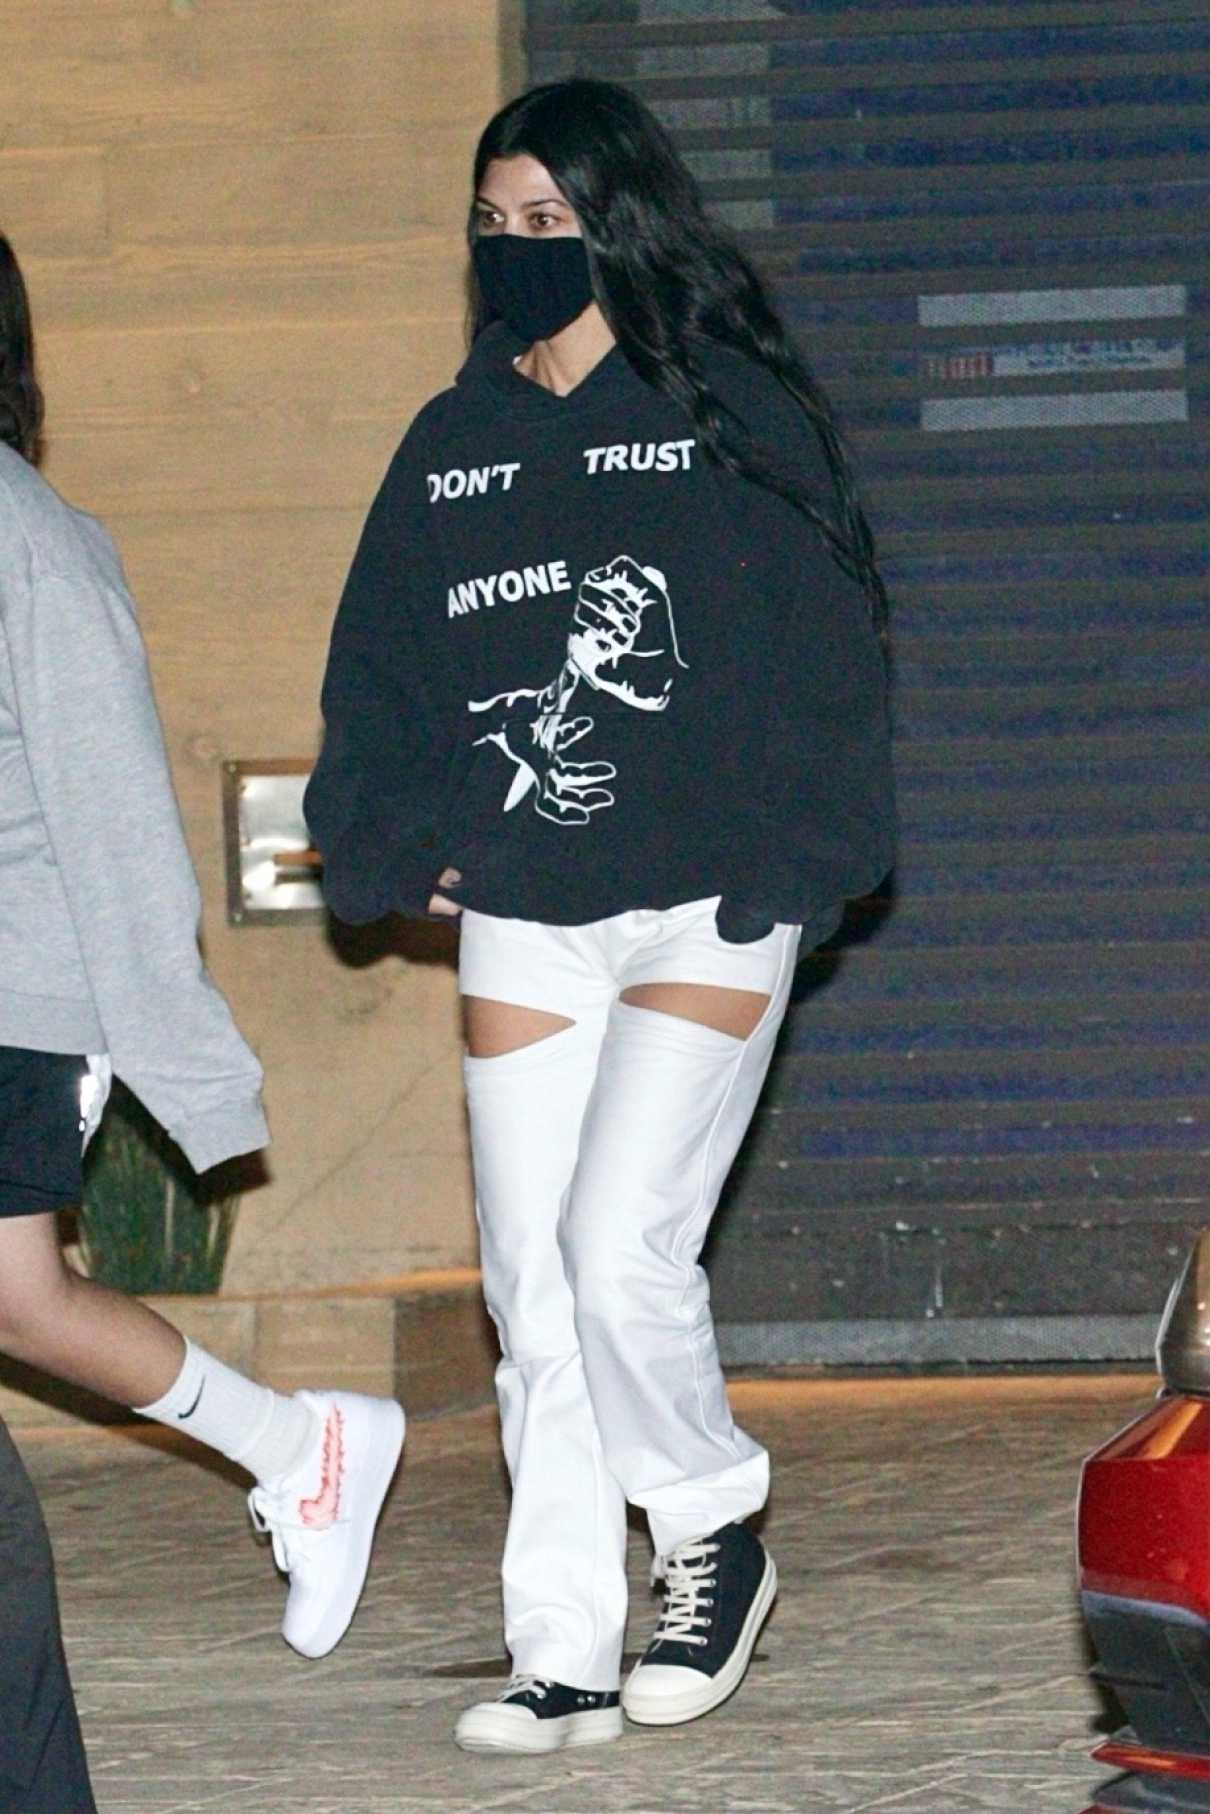 Kourtney Kardashian in a Black Hoodie